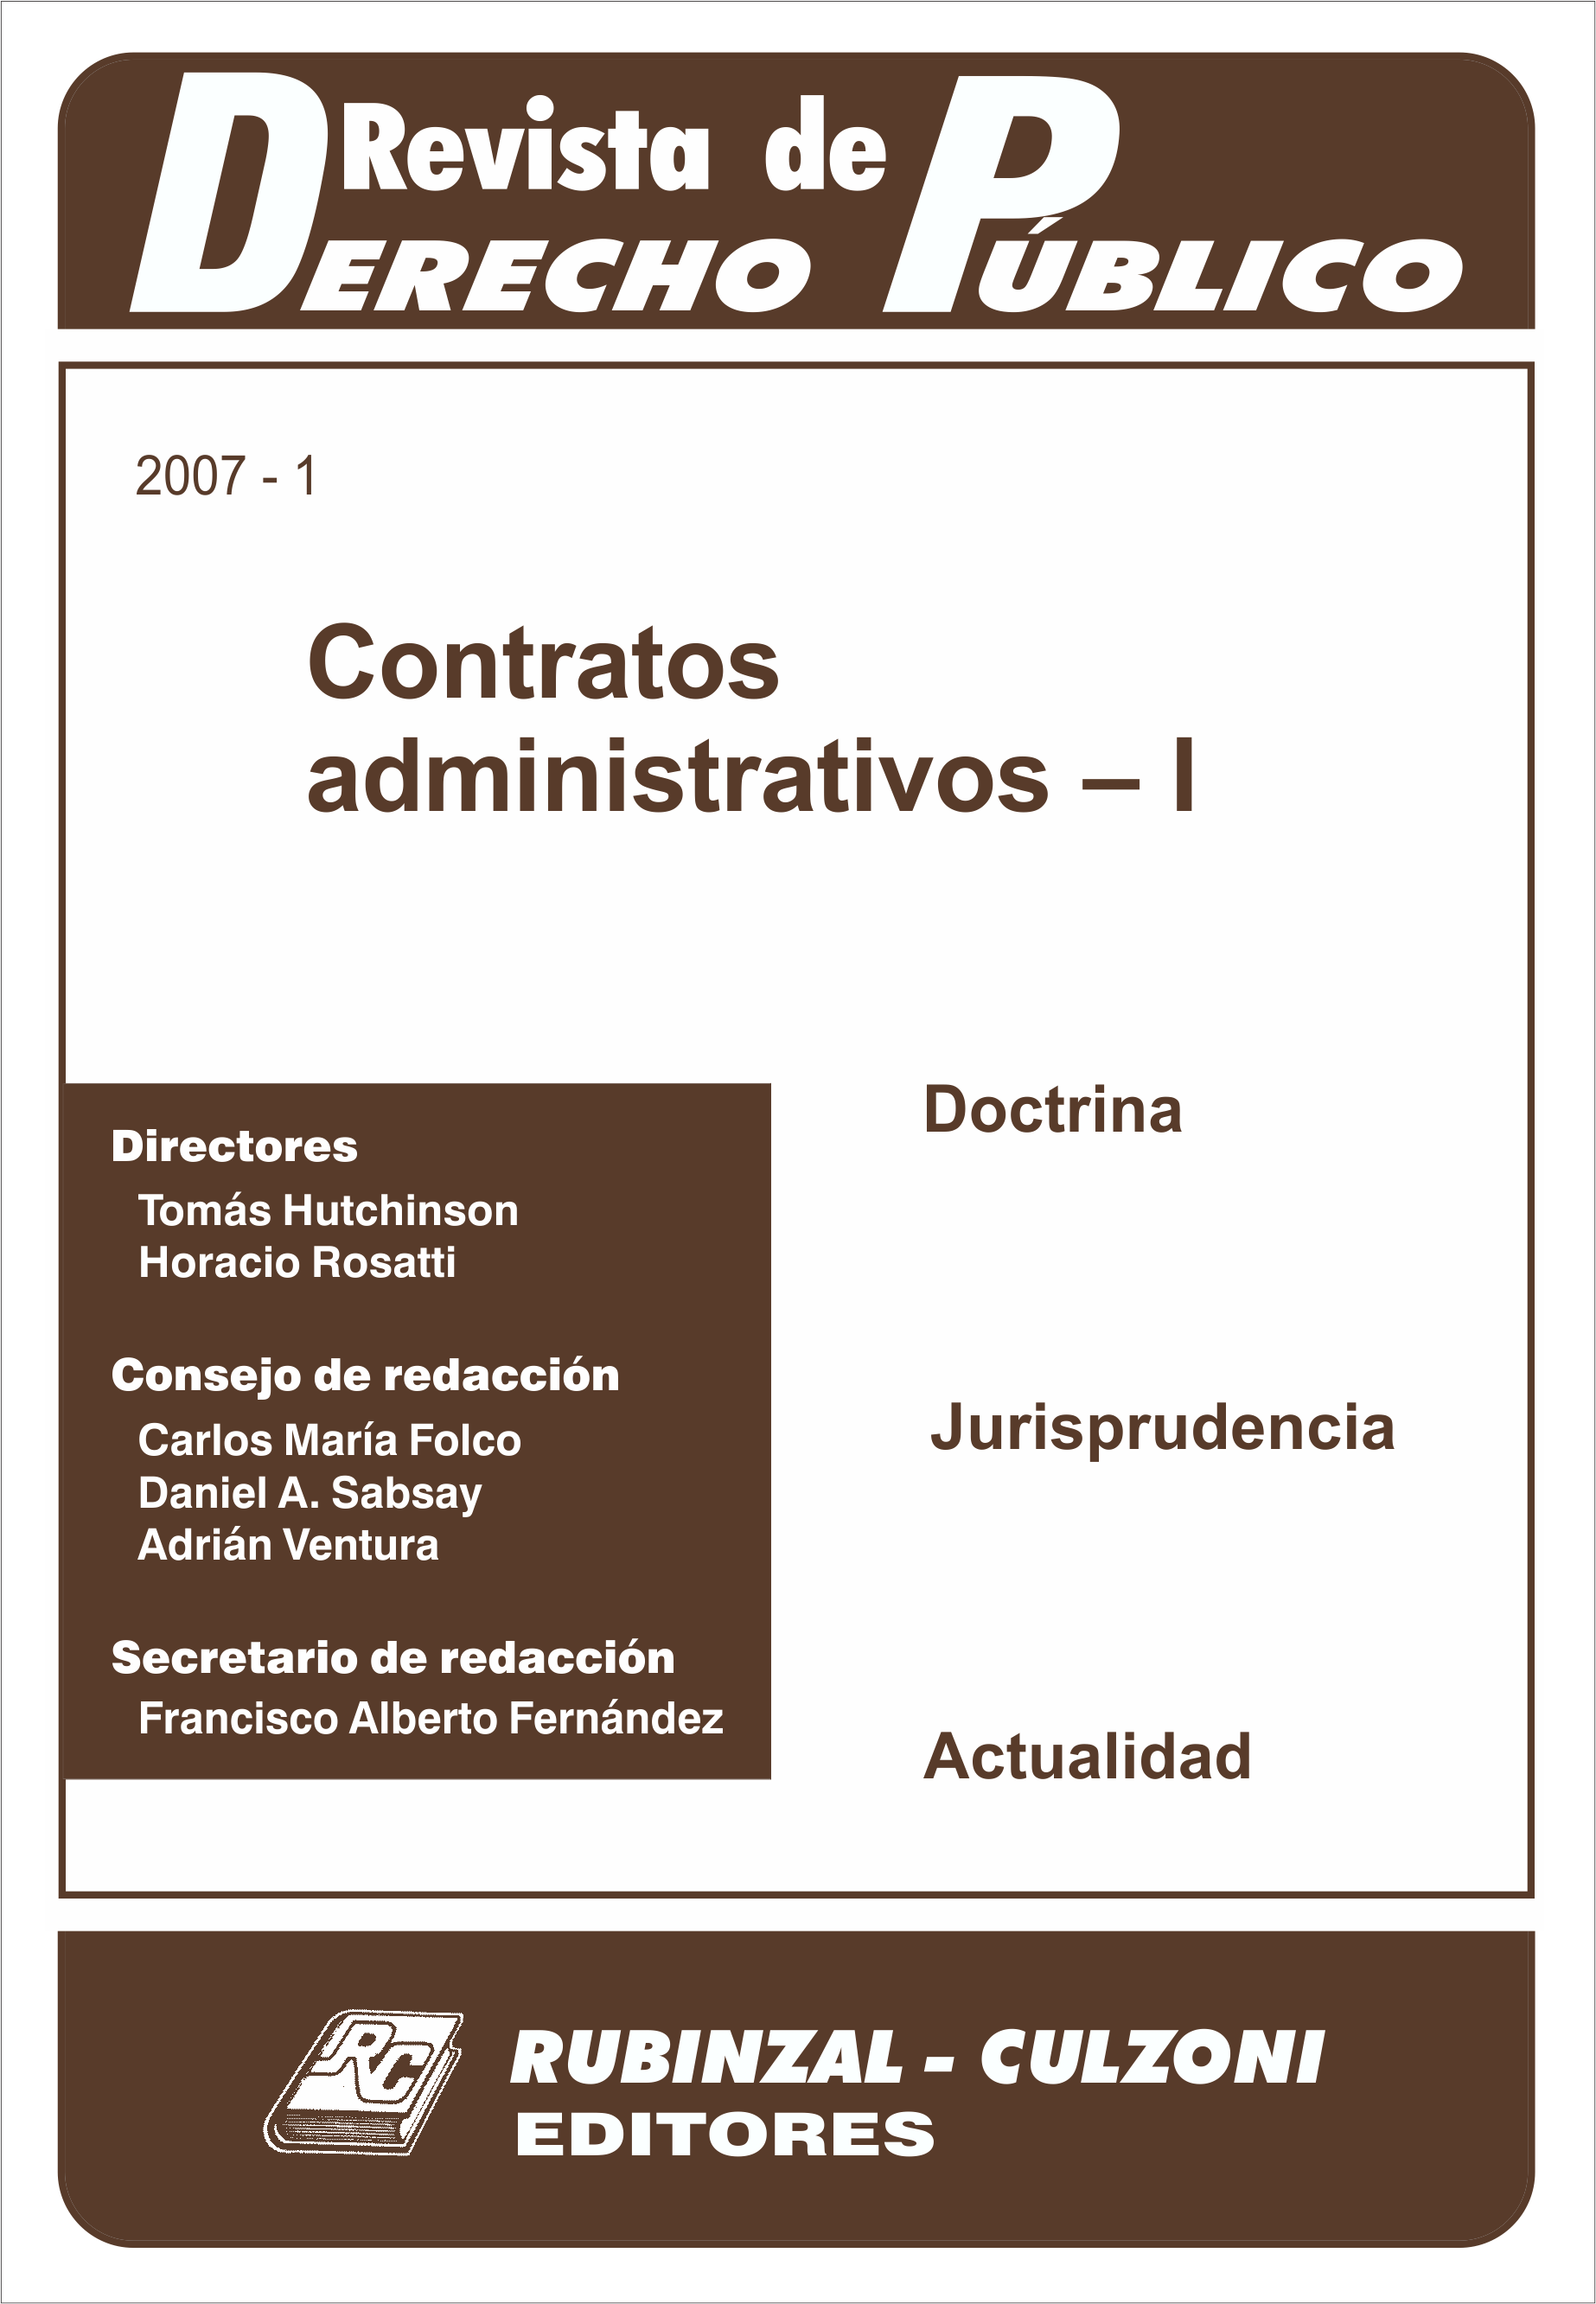 Revista de Derecho Público - Contratos administrativos - I